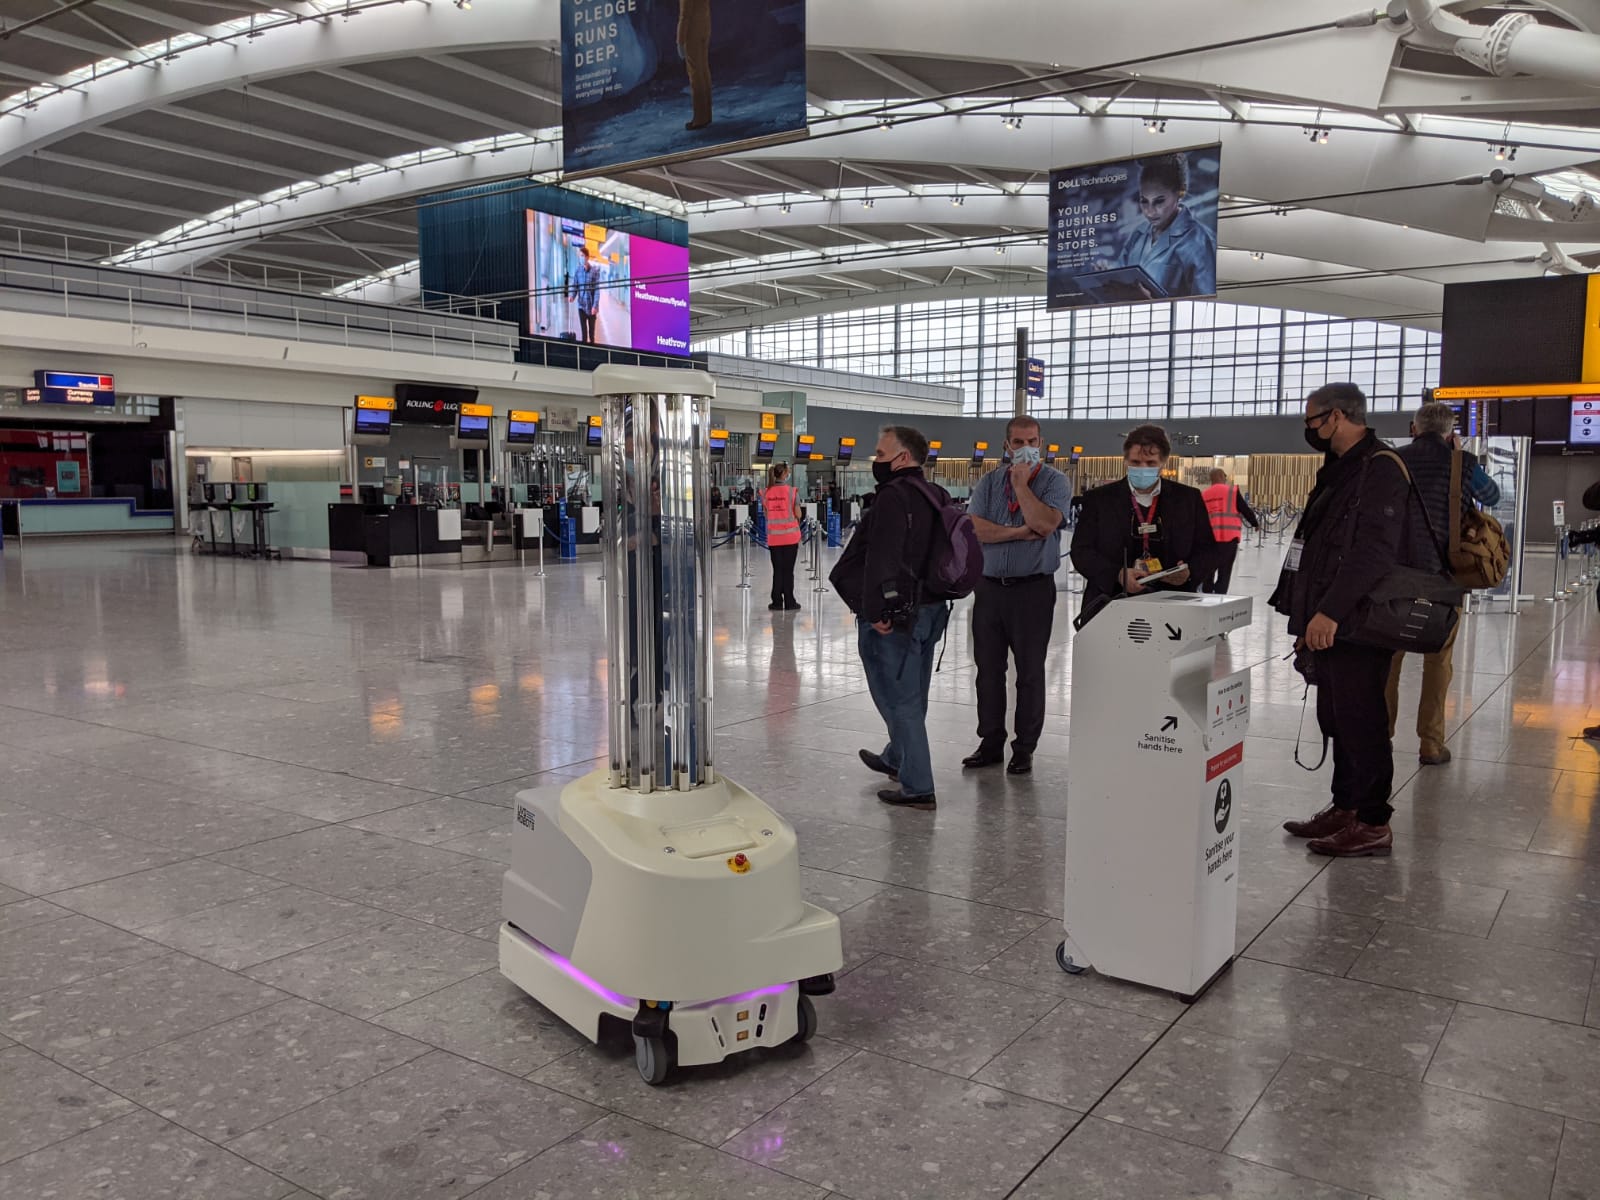 Heathrow’s UV robots all have names